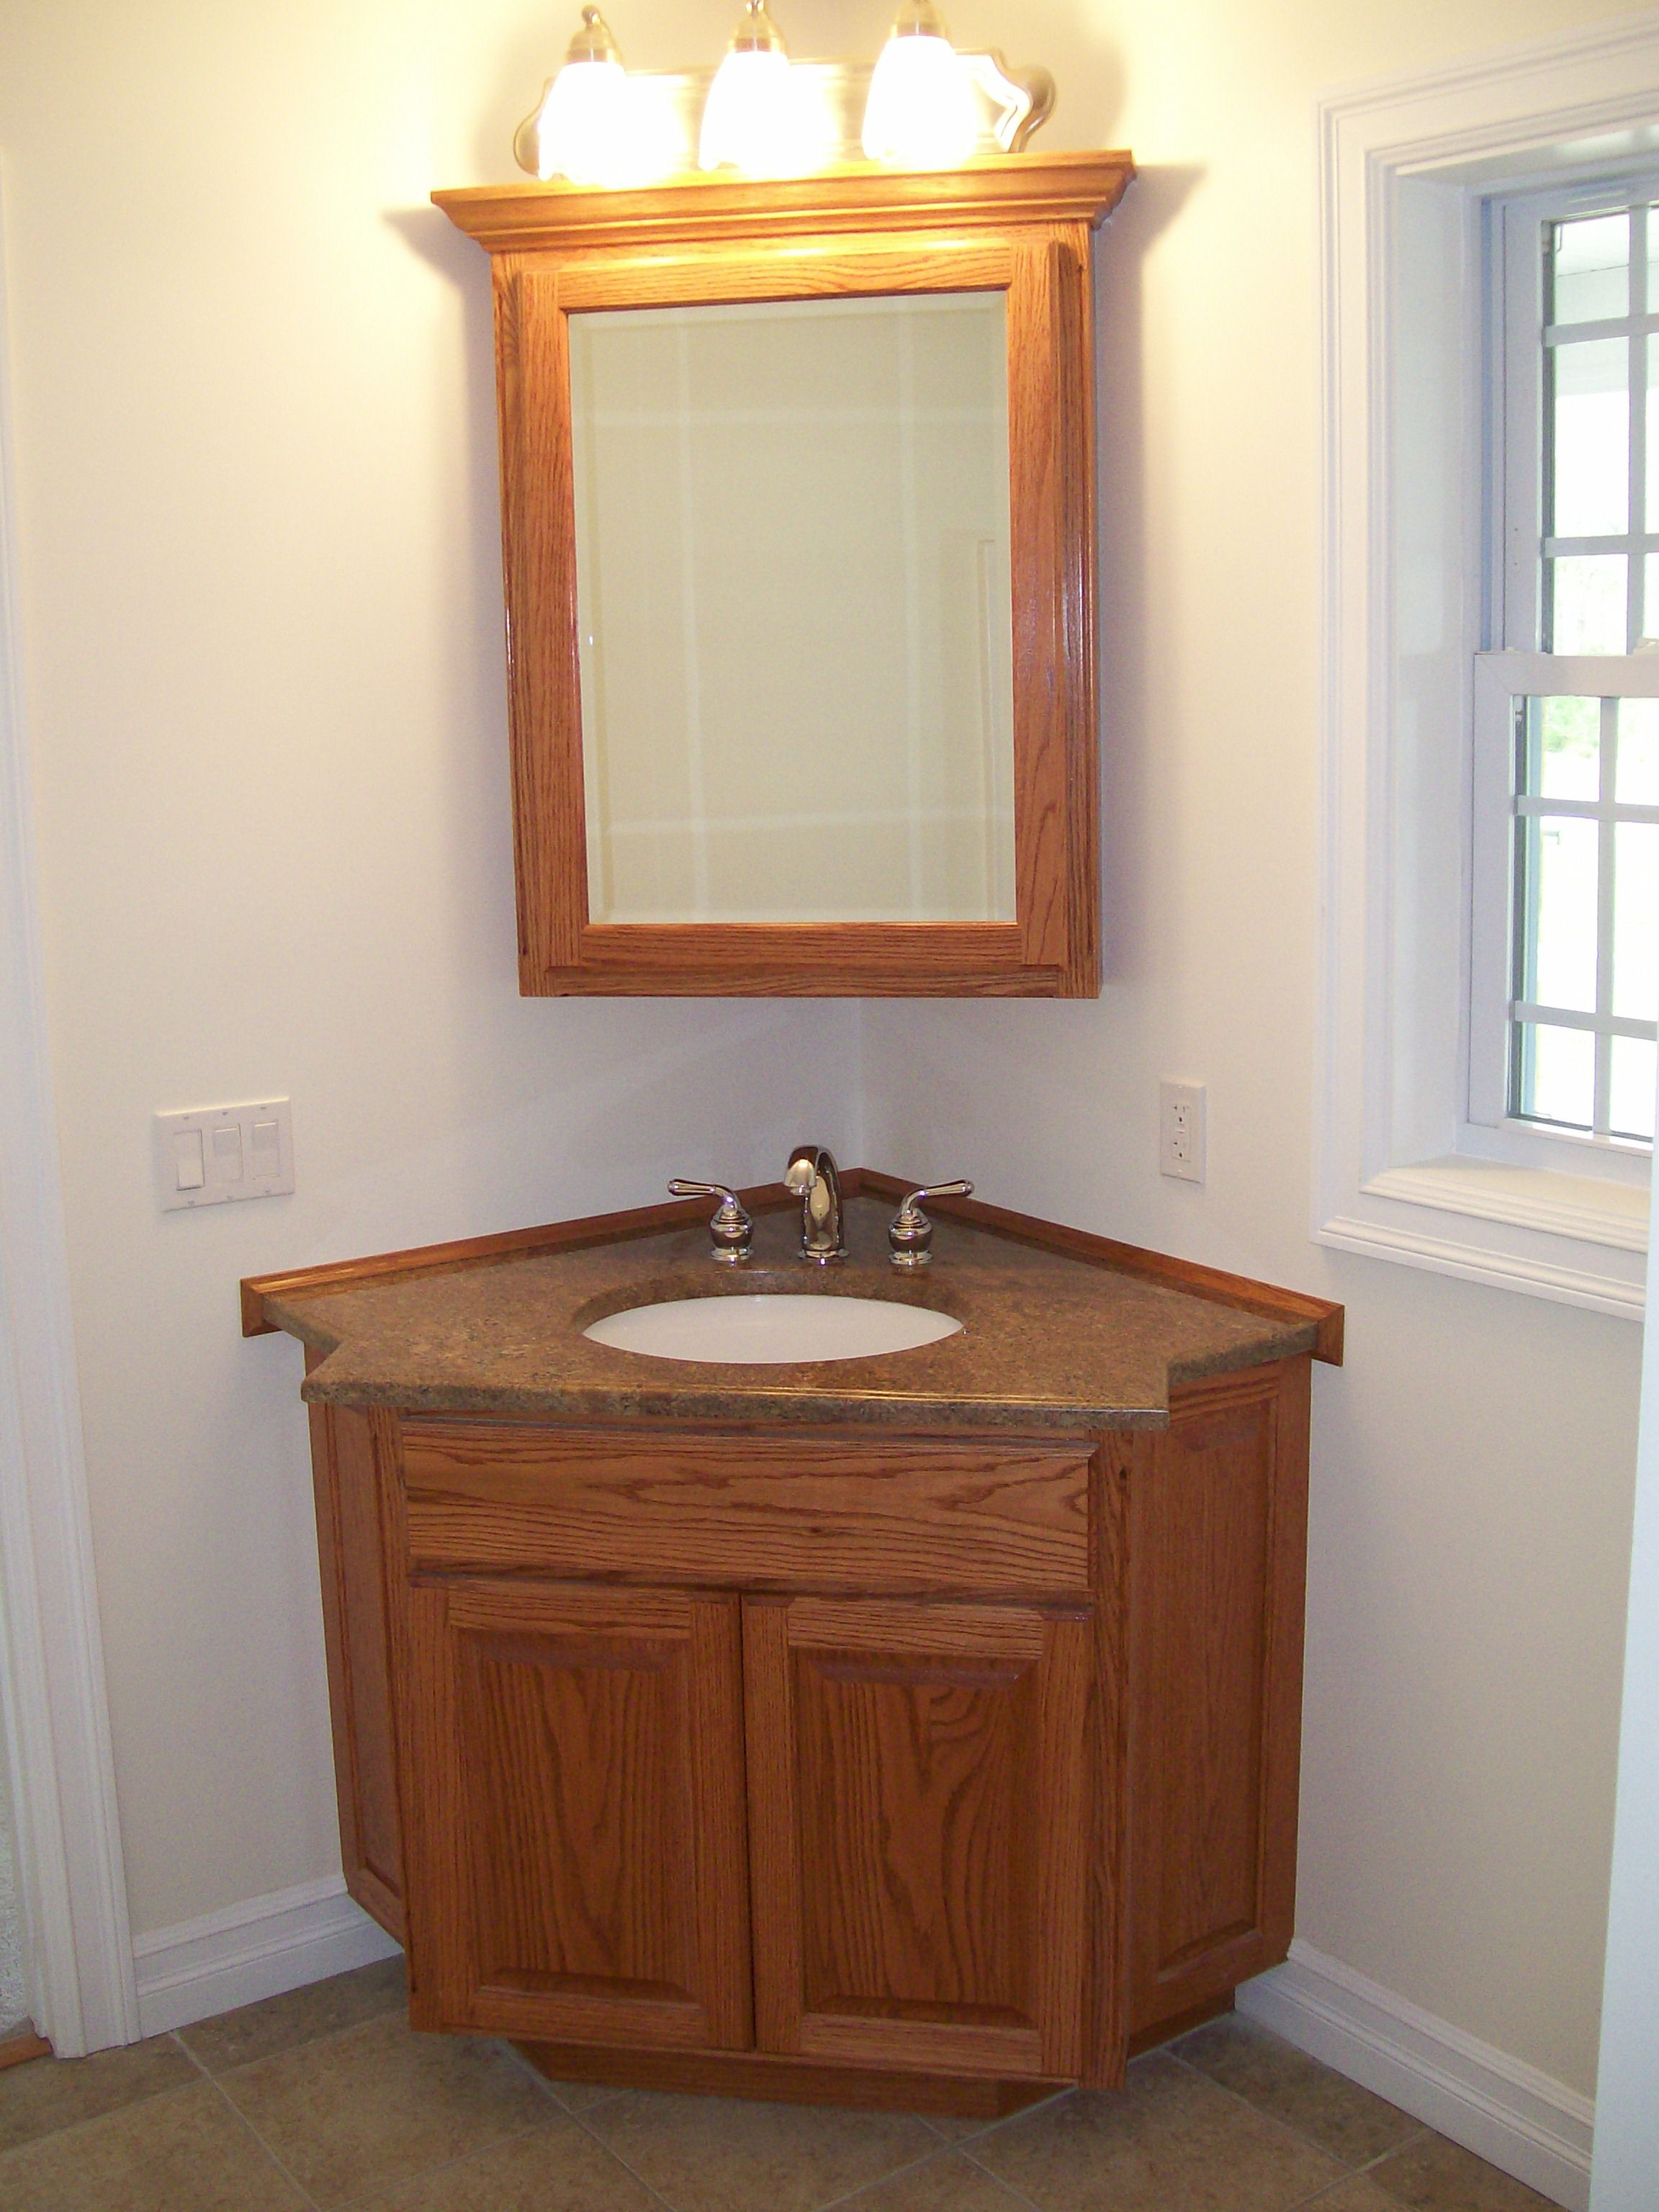 Best ideas about Corner Bathroom Cabinet
. Save or Pin 1000 ideas about Corner Bathroom Vanity on Pinterest Now.